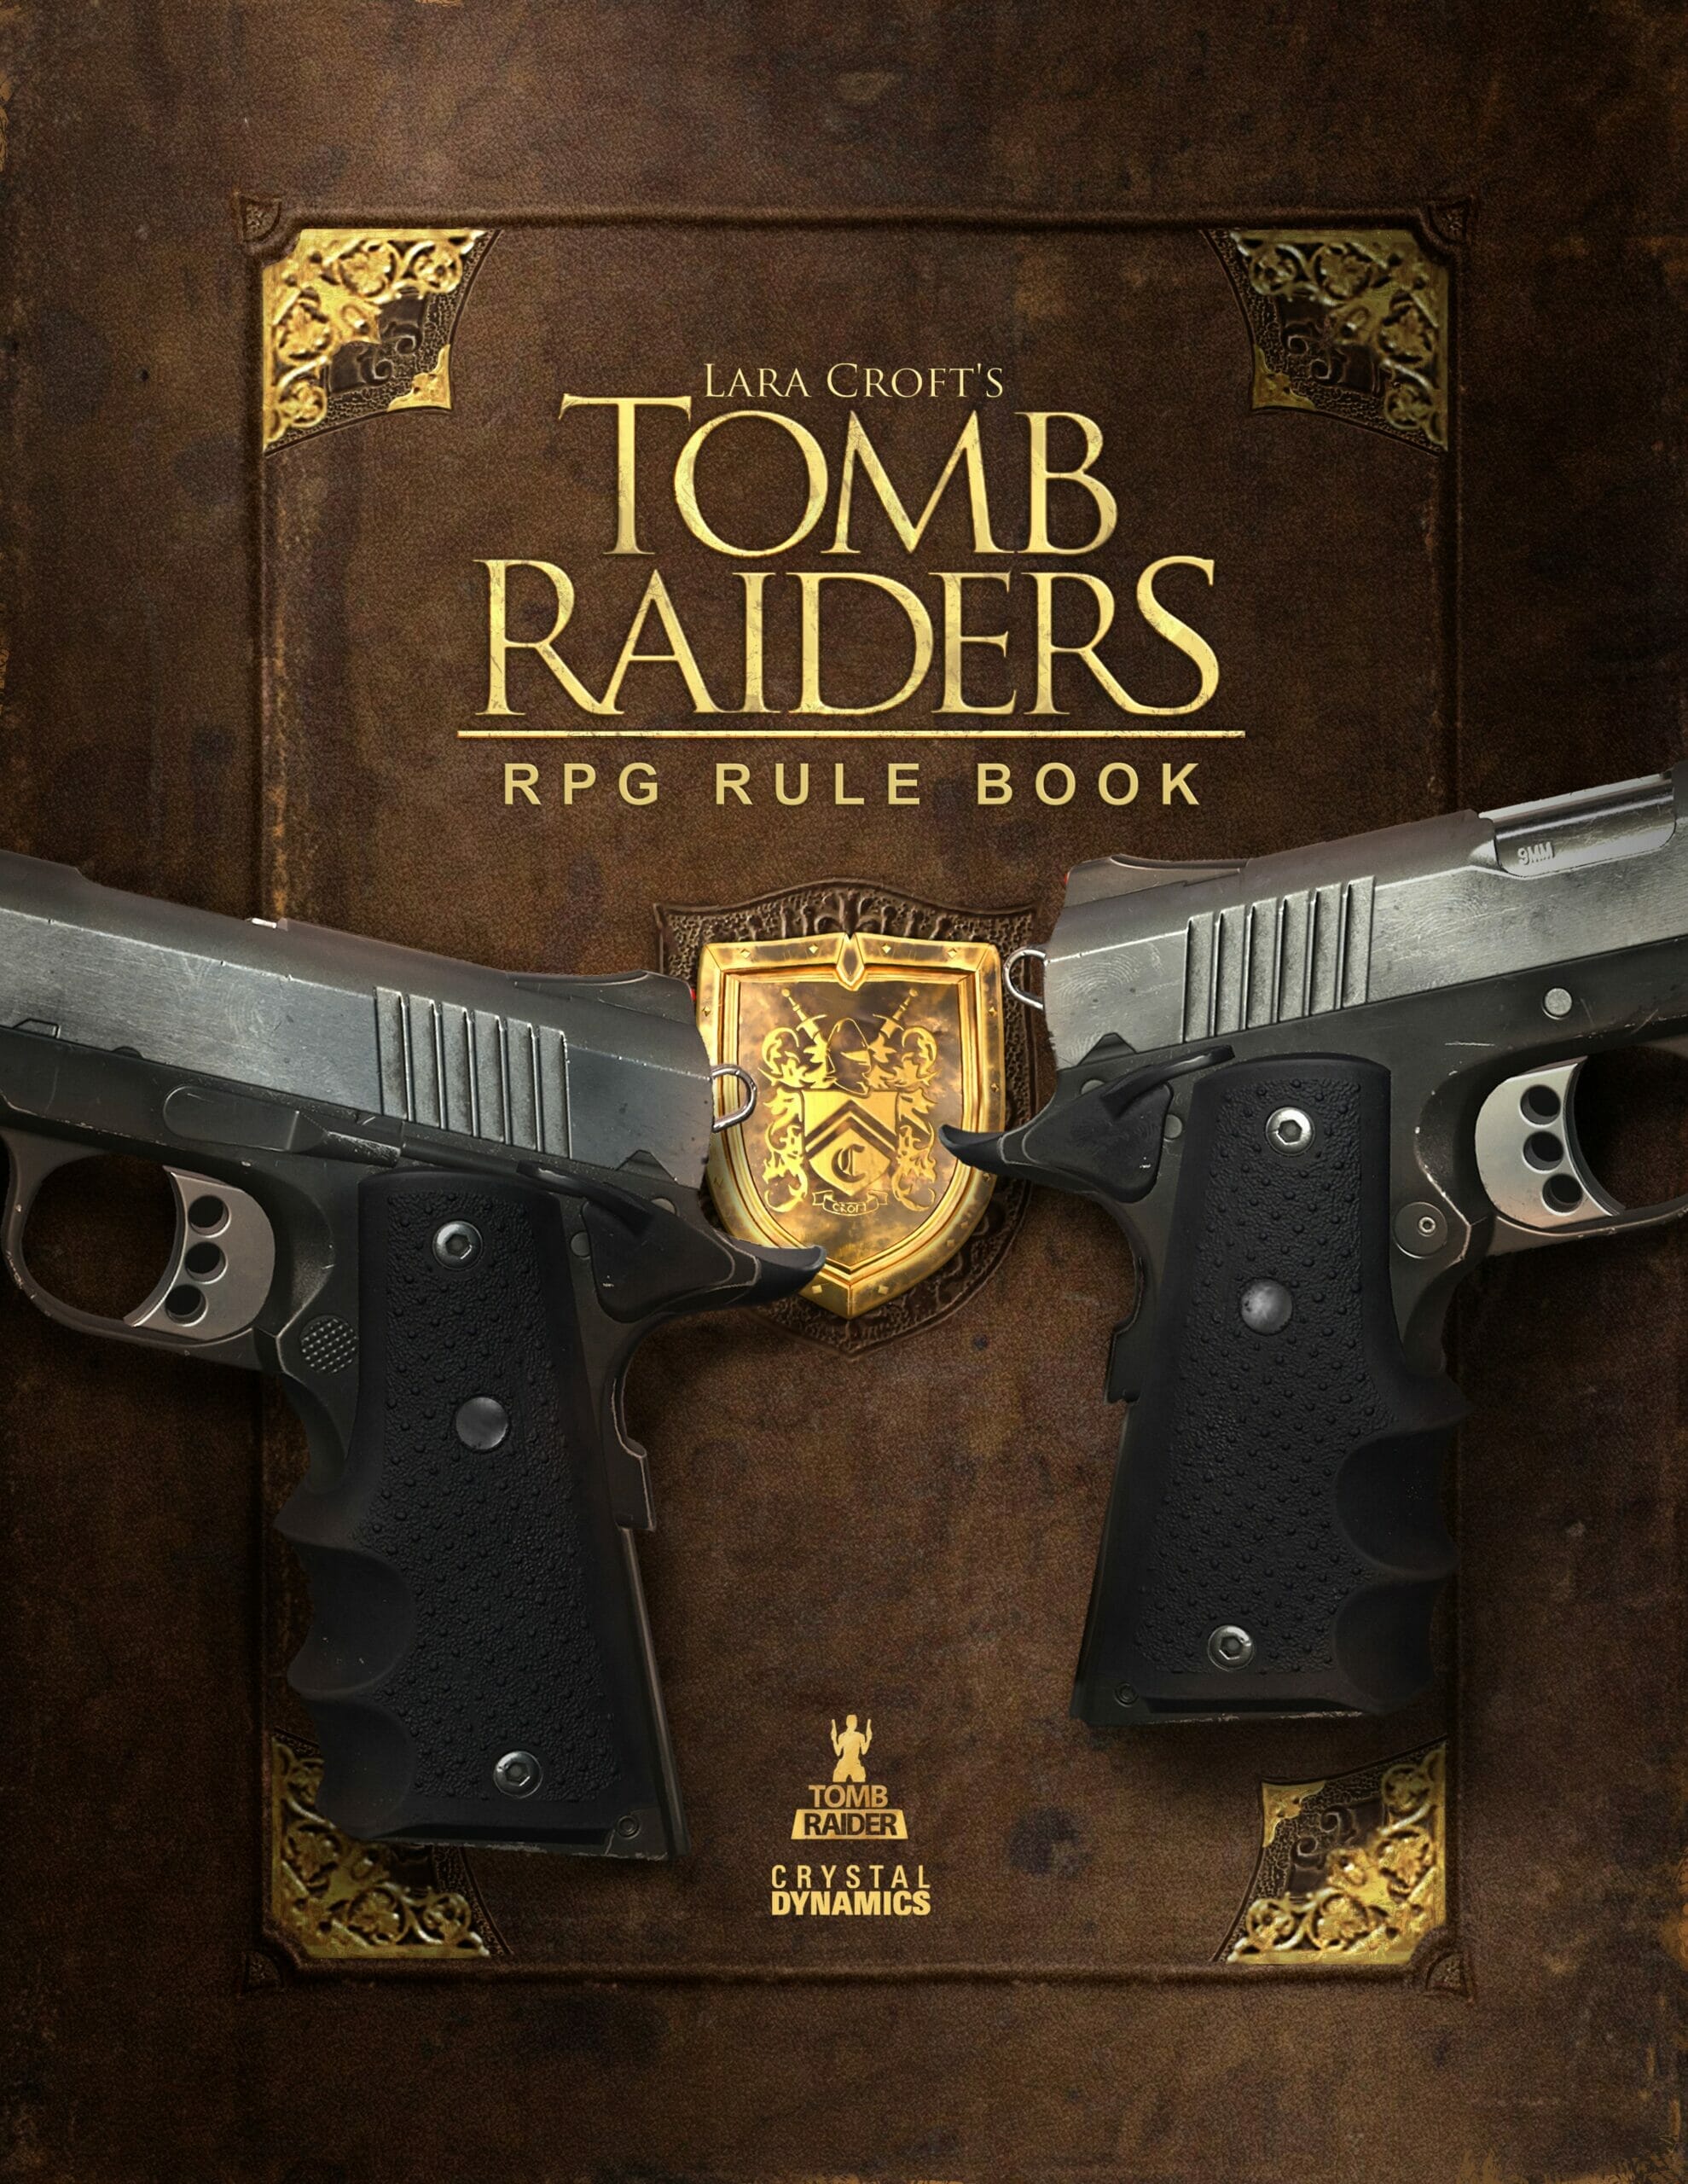 Lara Croft's Tomb Raider RPG cover - two guns and a shield